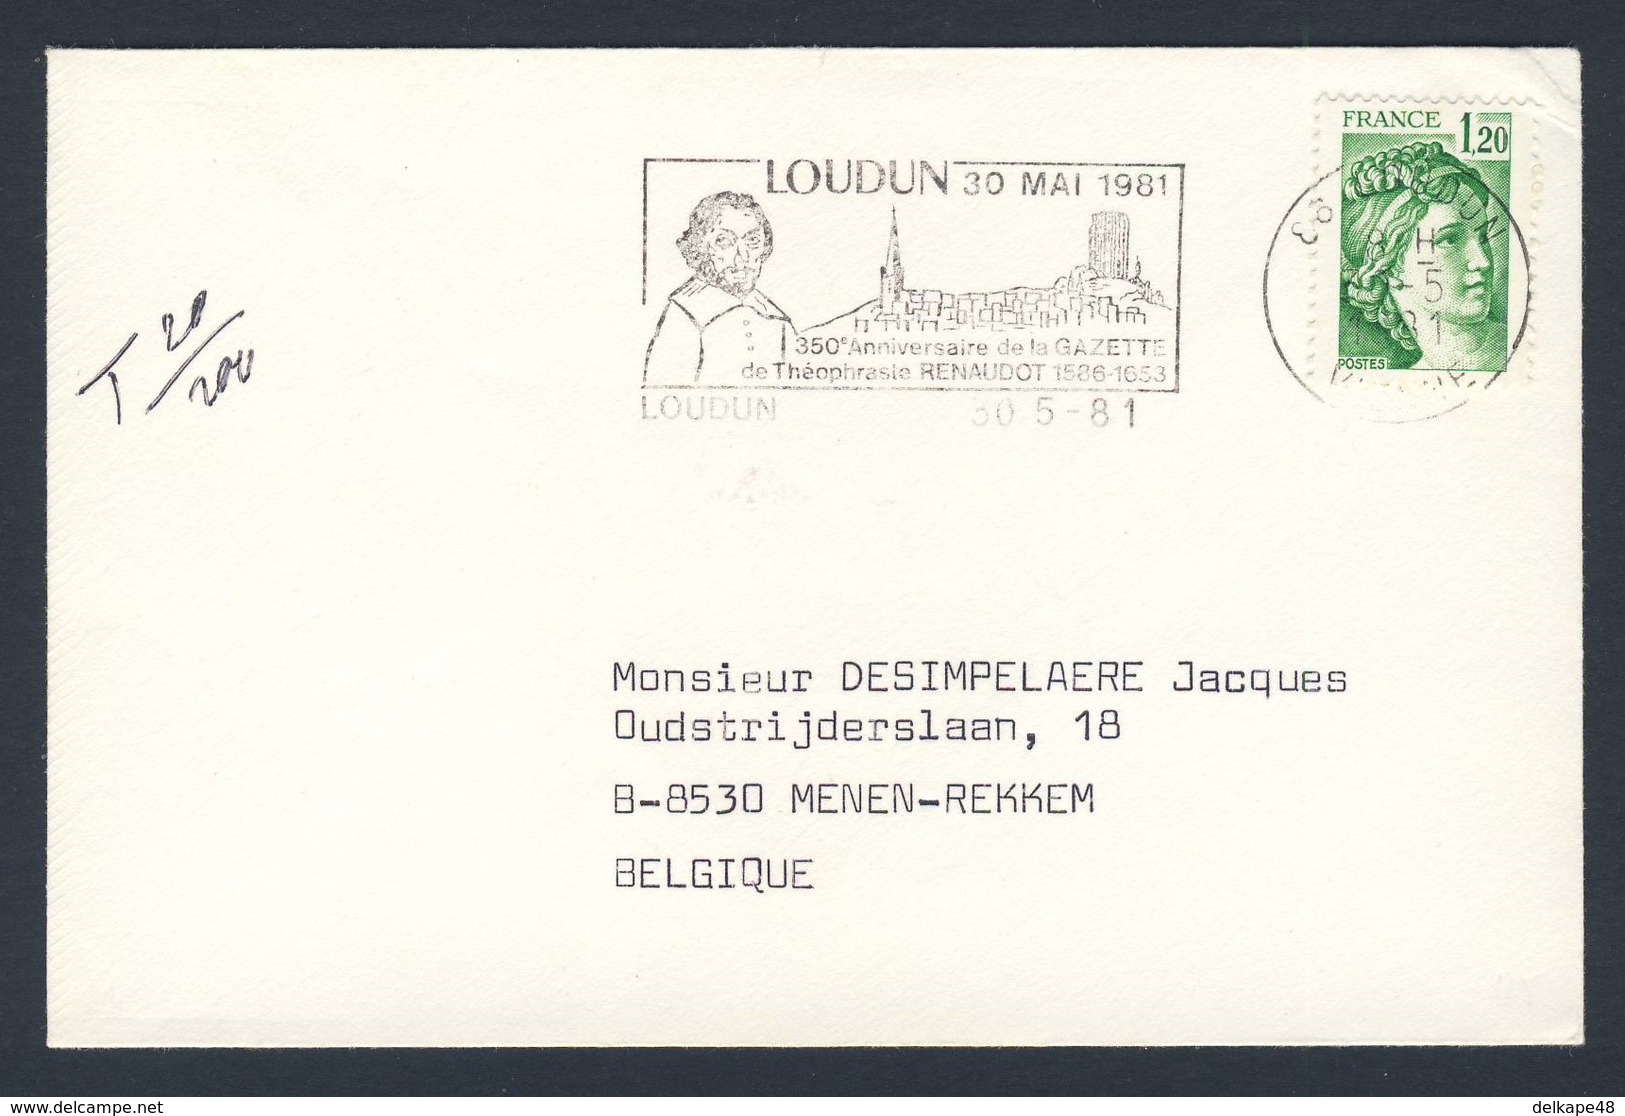 France Rep. Française 1981 Cover / Brief / Enveloppe - 350 Ann. Gazette De Théophraste Renaudot, Journalist - Schrijvers